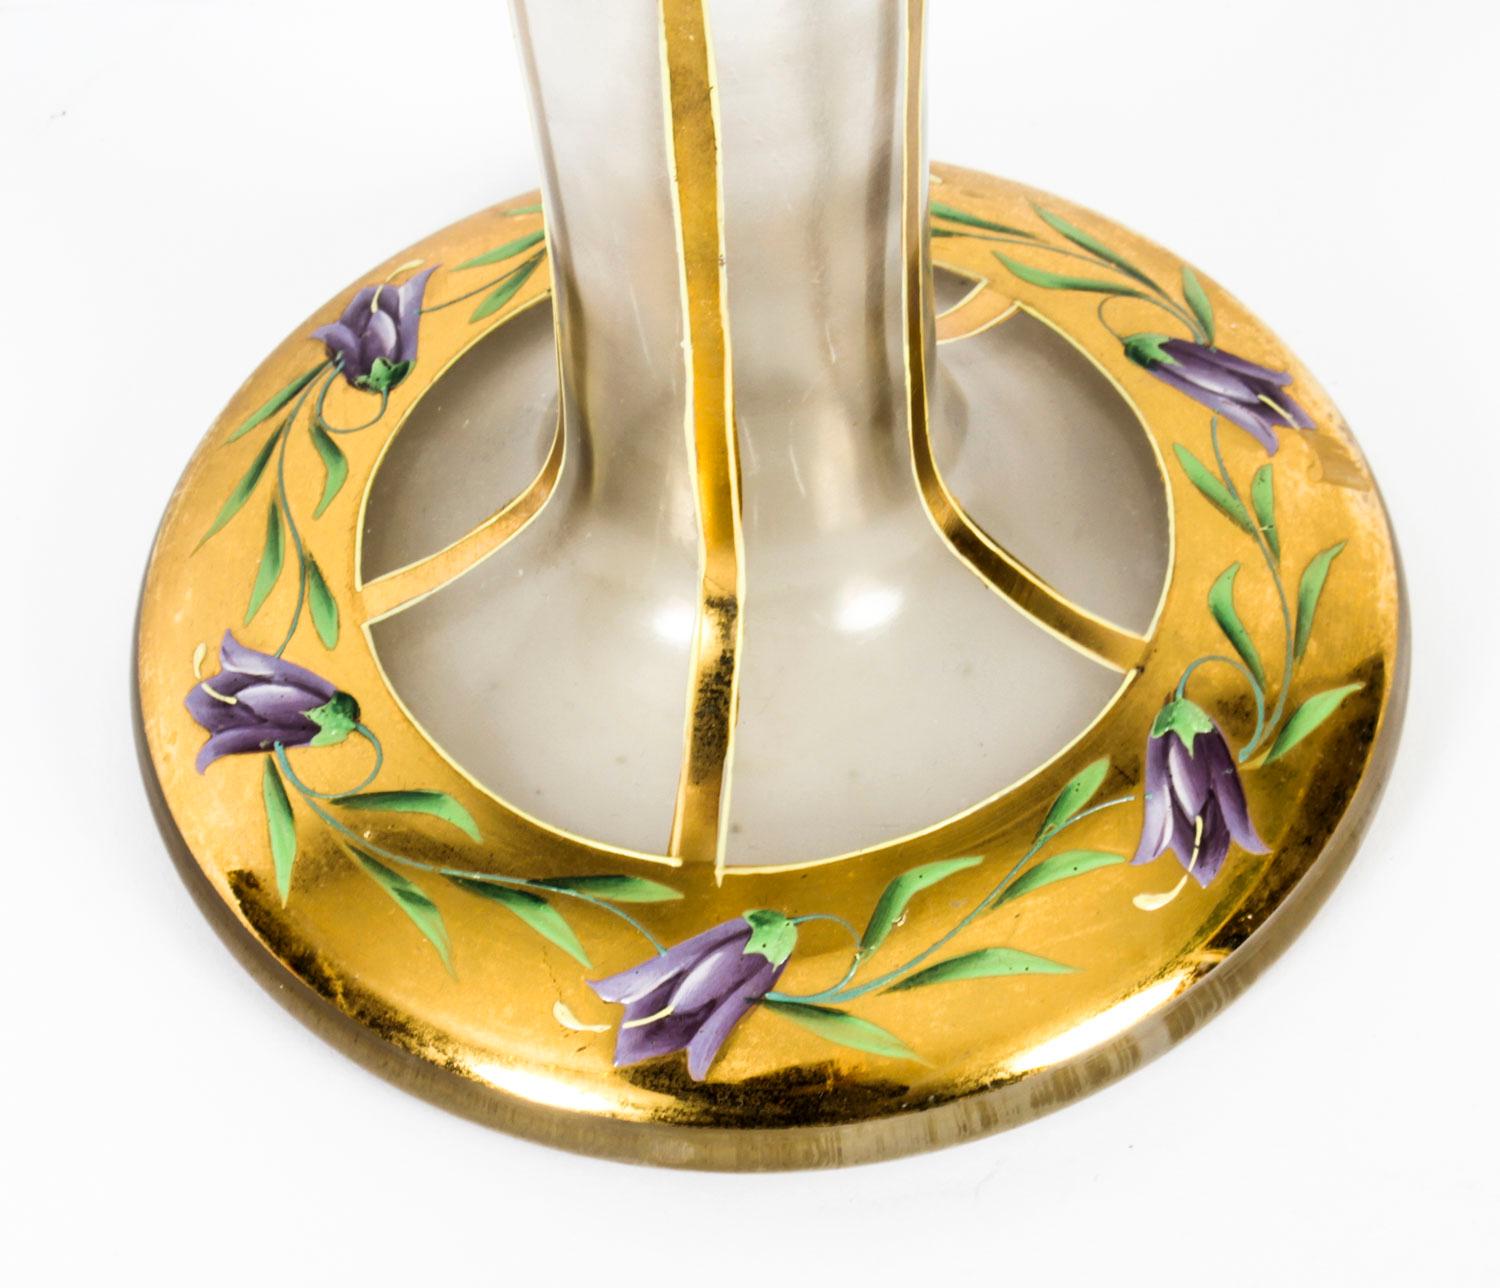 Antique French Art Nouveau Enameled Glass Vase, 19th Century 3